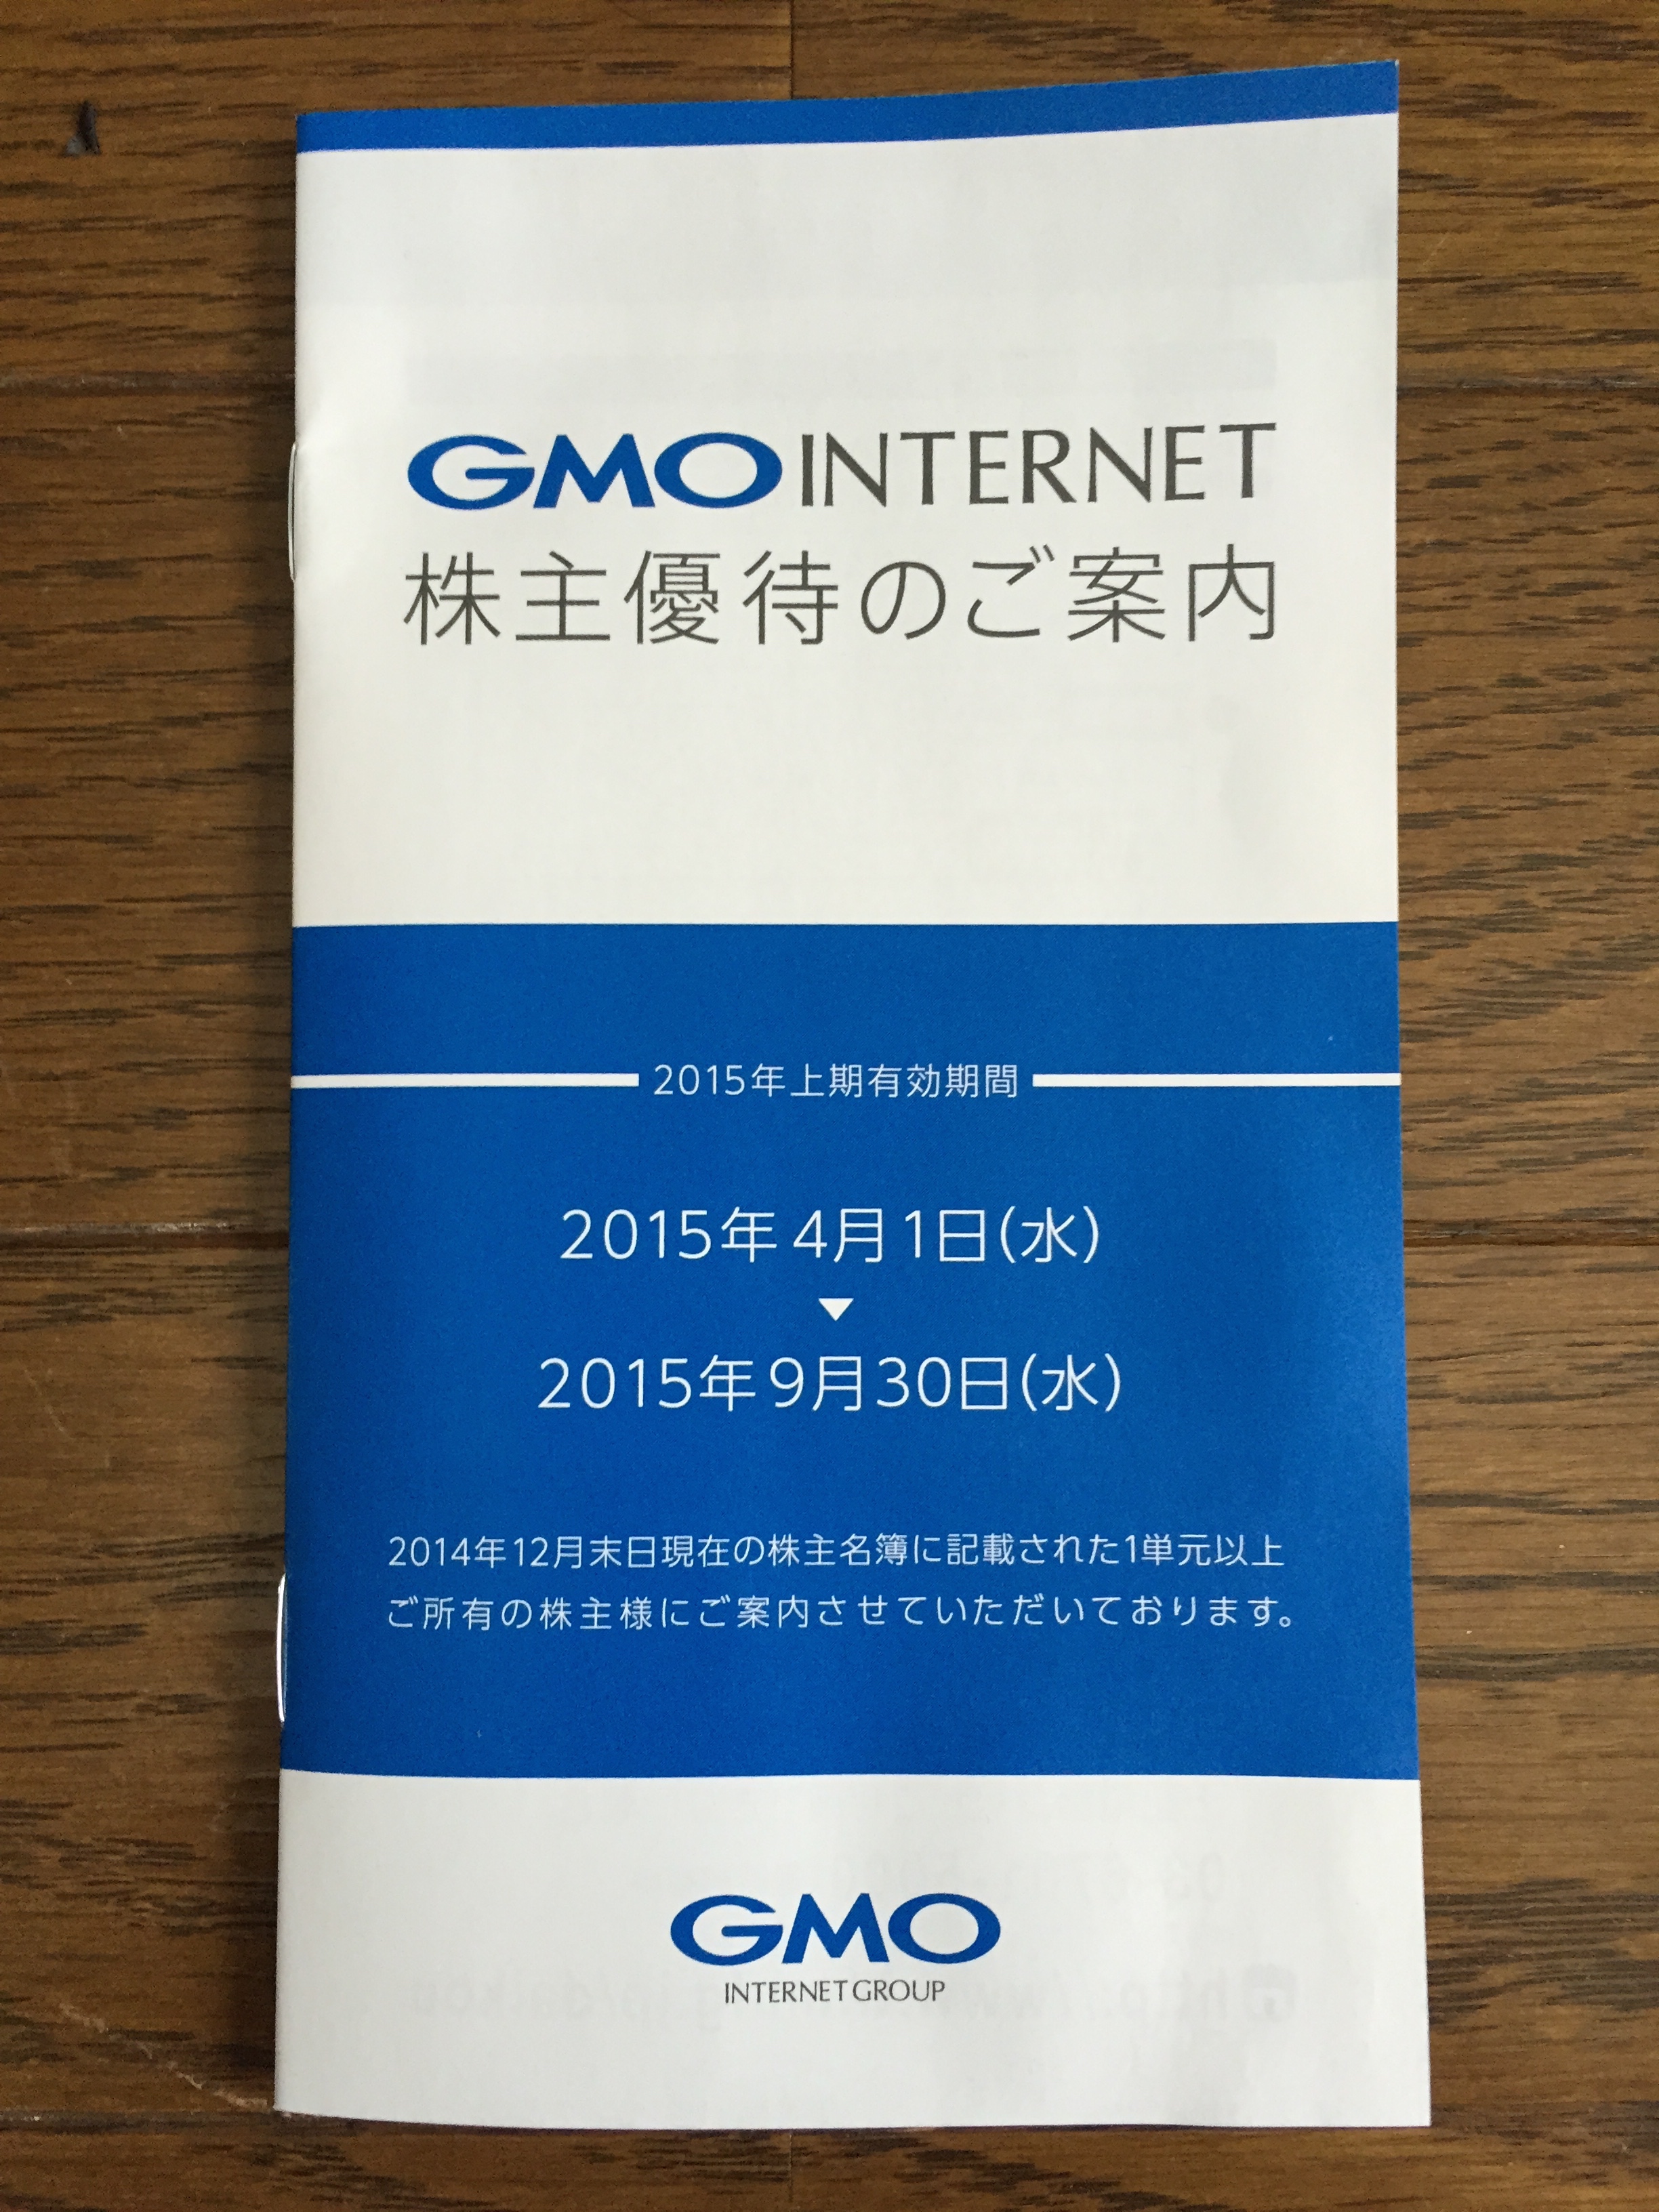 GMOインターネット (9449) の株主優待が到着!! 優待を受けるための手続方法を徹底紹介!!